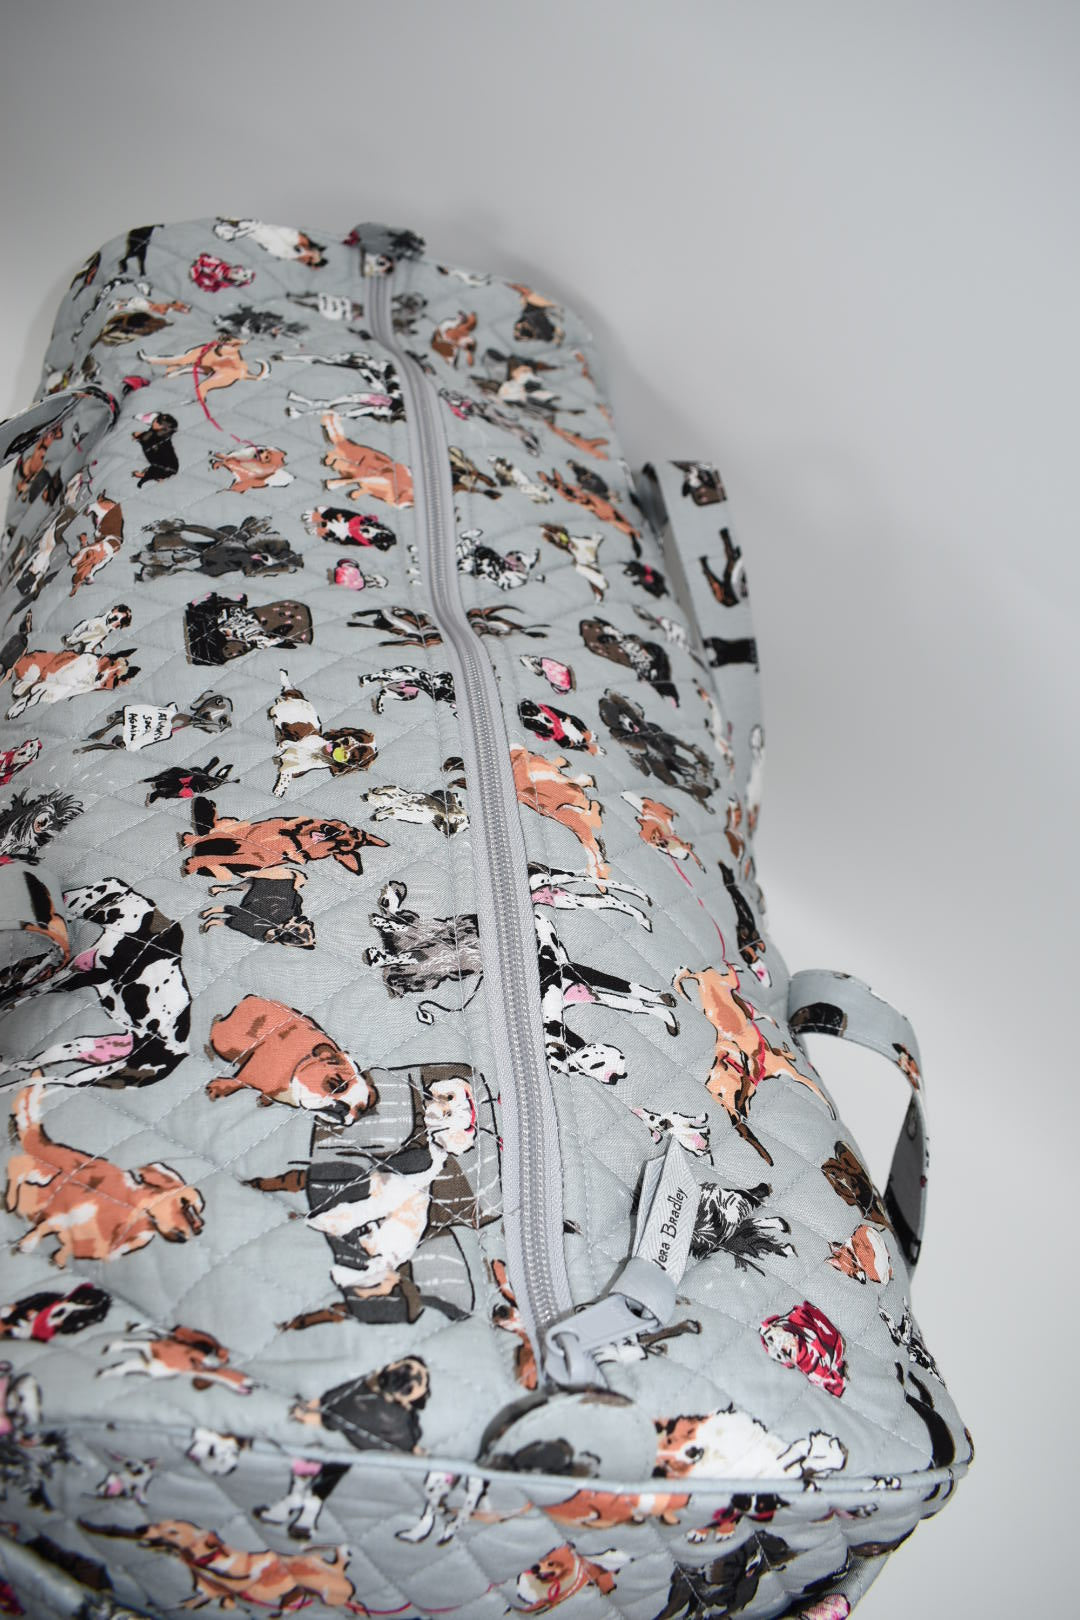 Vera Bradley Large Traveler Duffel Bag in "Dog Show" Pattern